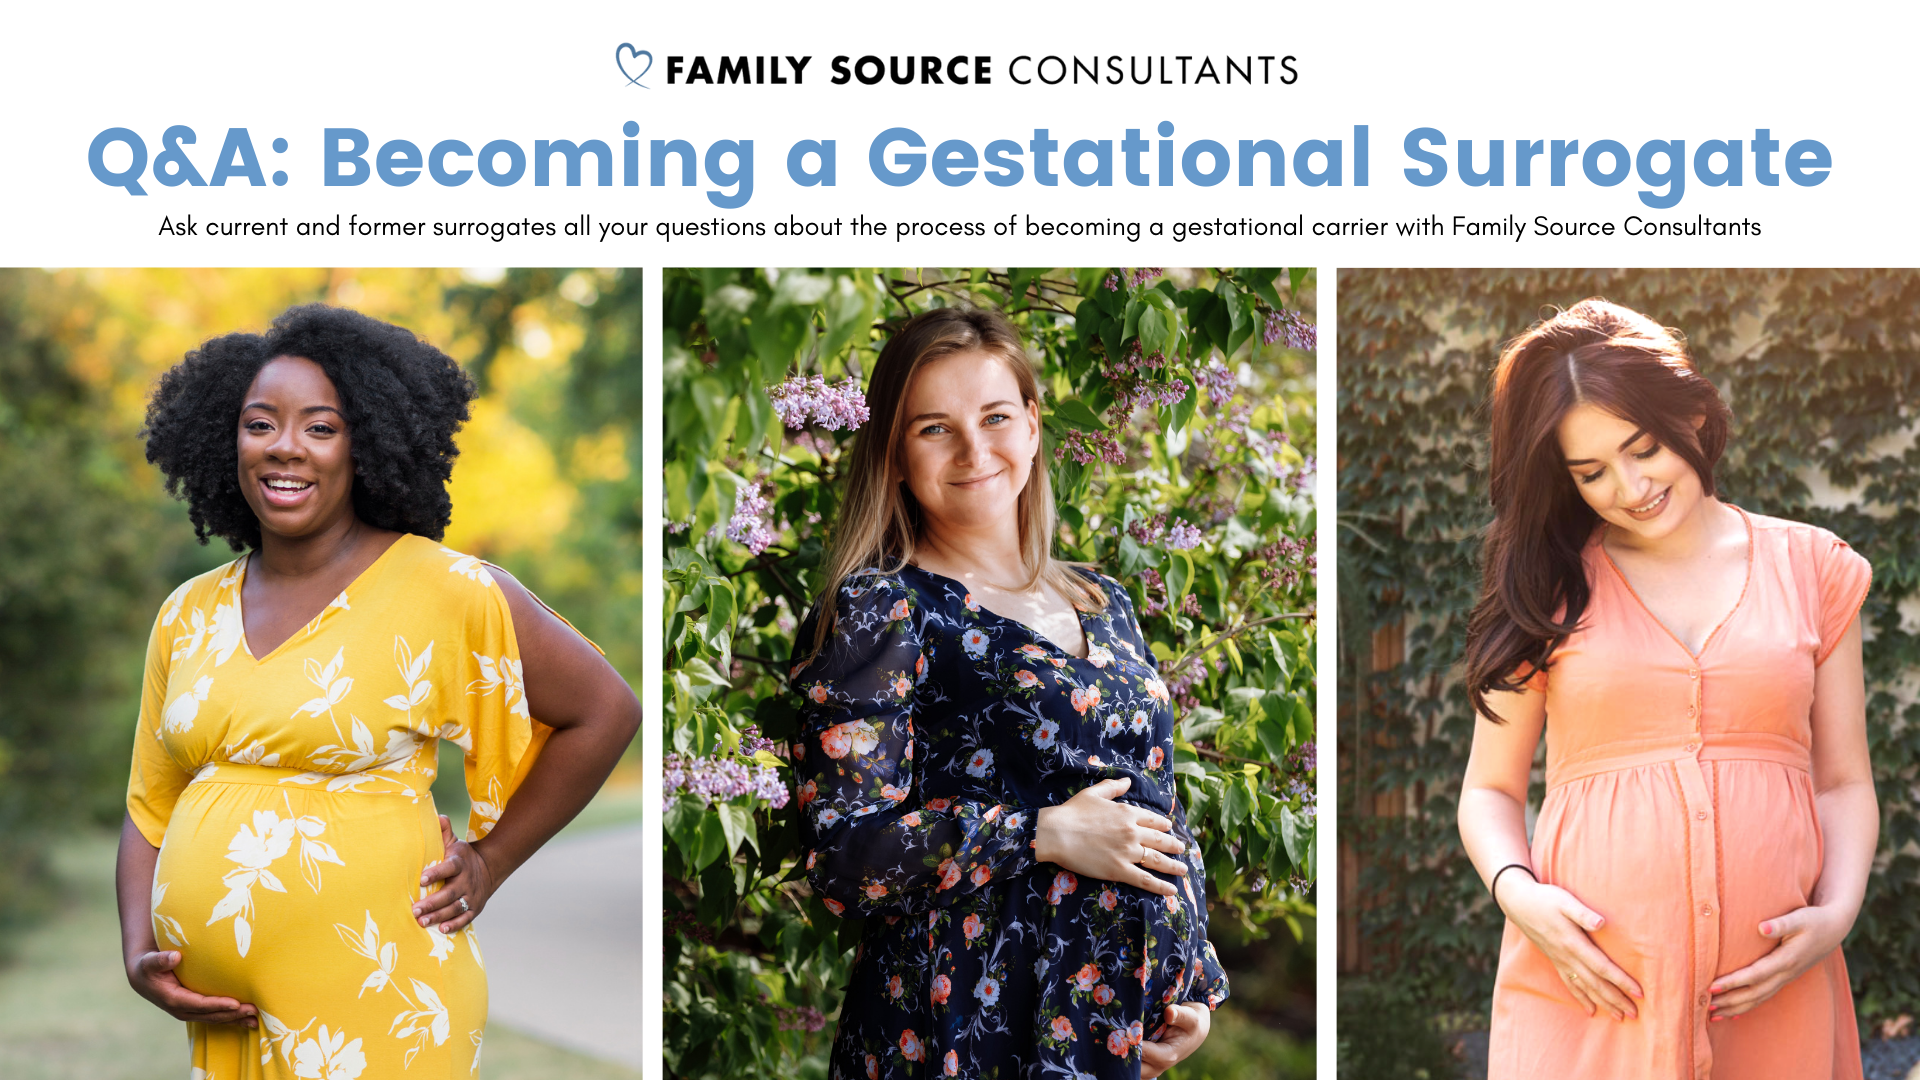 q&a: becoming a gestational surrogate